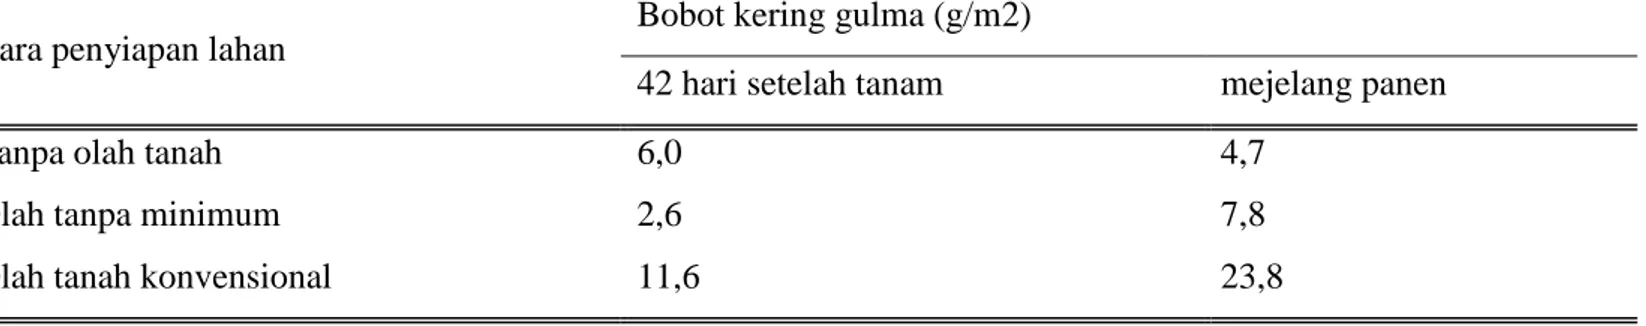 Tabel 2 Bobot gulma tanaman jagung tanpa olah tanah pada tanah Inceptisol bertekstur liat Wolangi, Kabupaten Bone